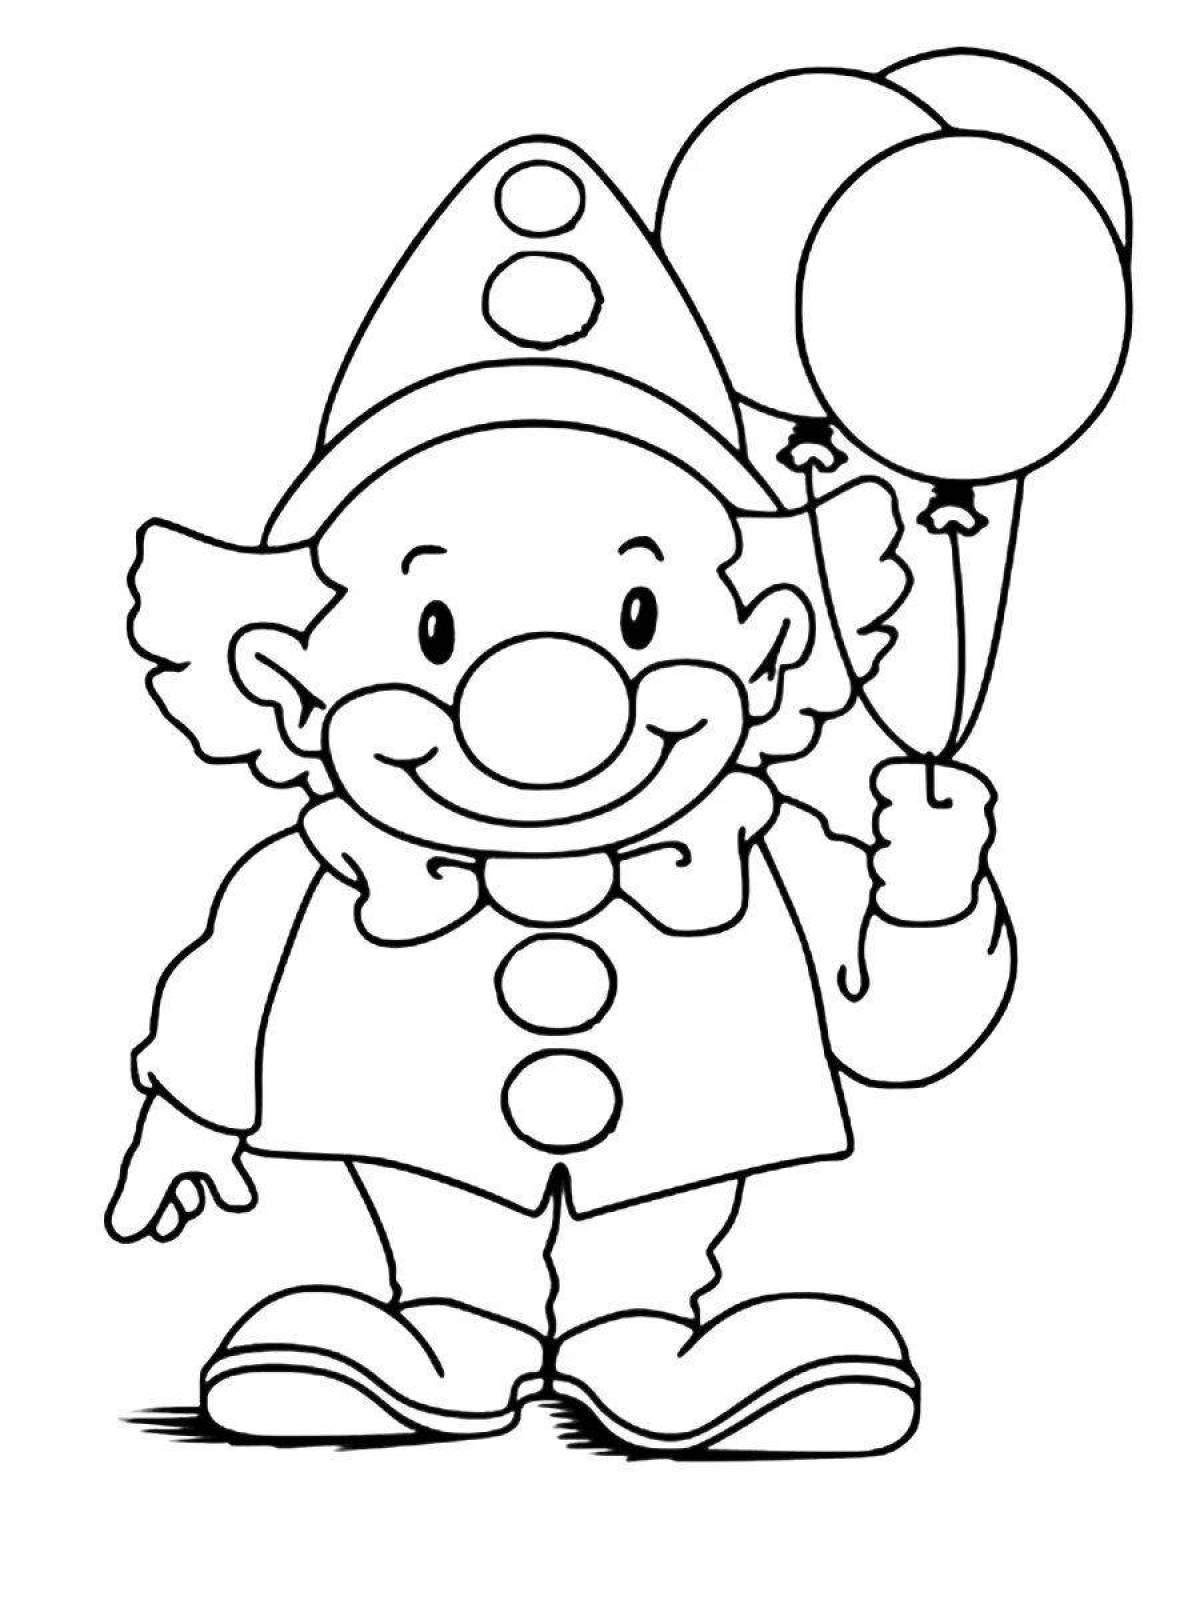 Dazzling clown coloring for preschoolers